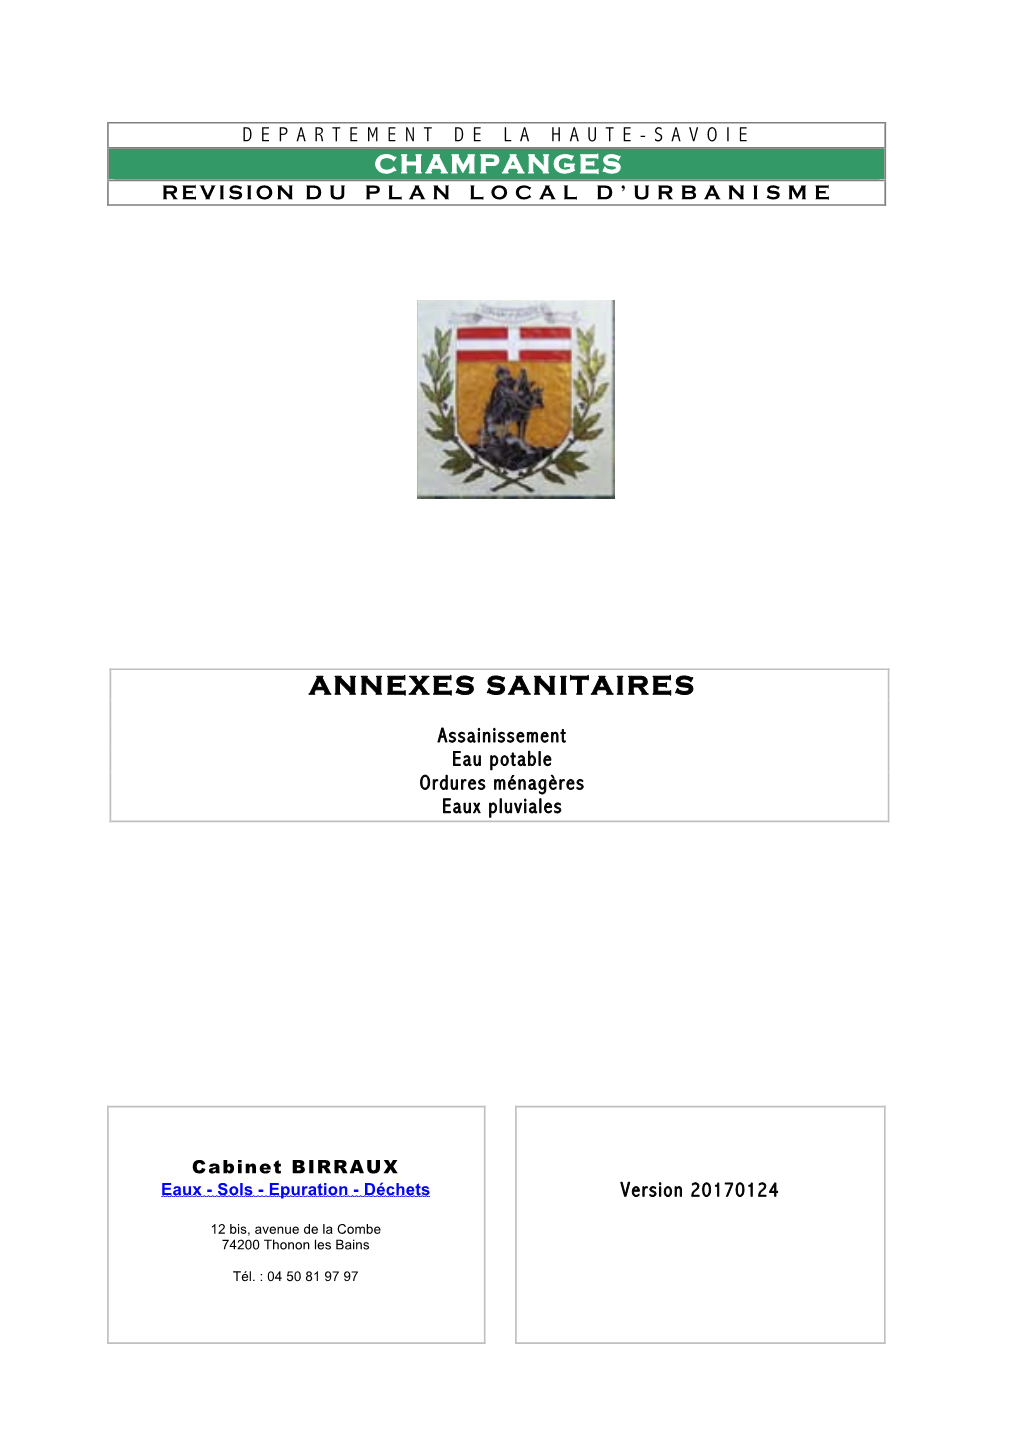 Champanges Annexes Sanitaires V20170124.Doc 2/ 24 ANNEXES